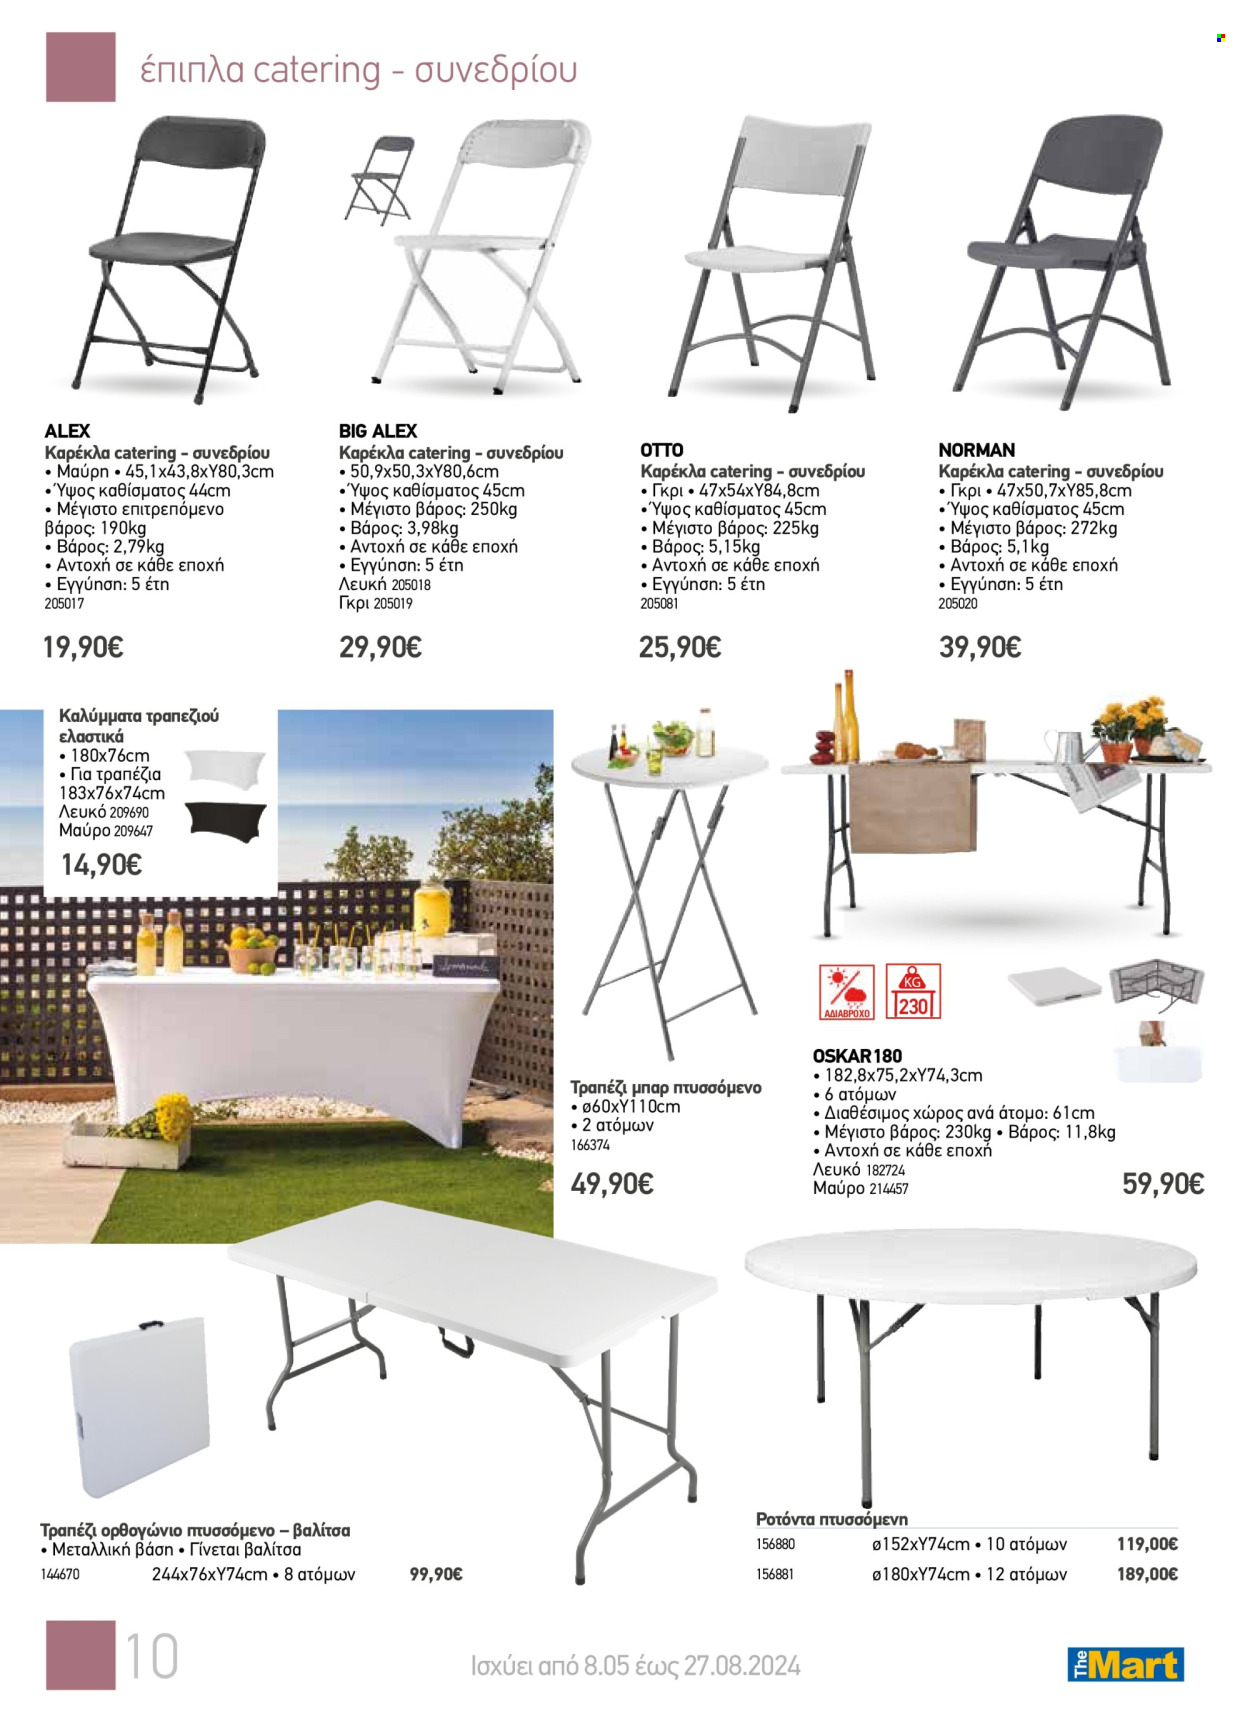 thumbnail - Φυλλάδια The Mart - 08.05.2024 - 27.08.2024 - Εκπτωτικά προϊόντα - τραπέζι, καρέκλα, αδιάβροχο, ελαστικά. Σελίδα 10.